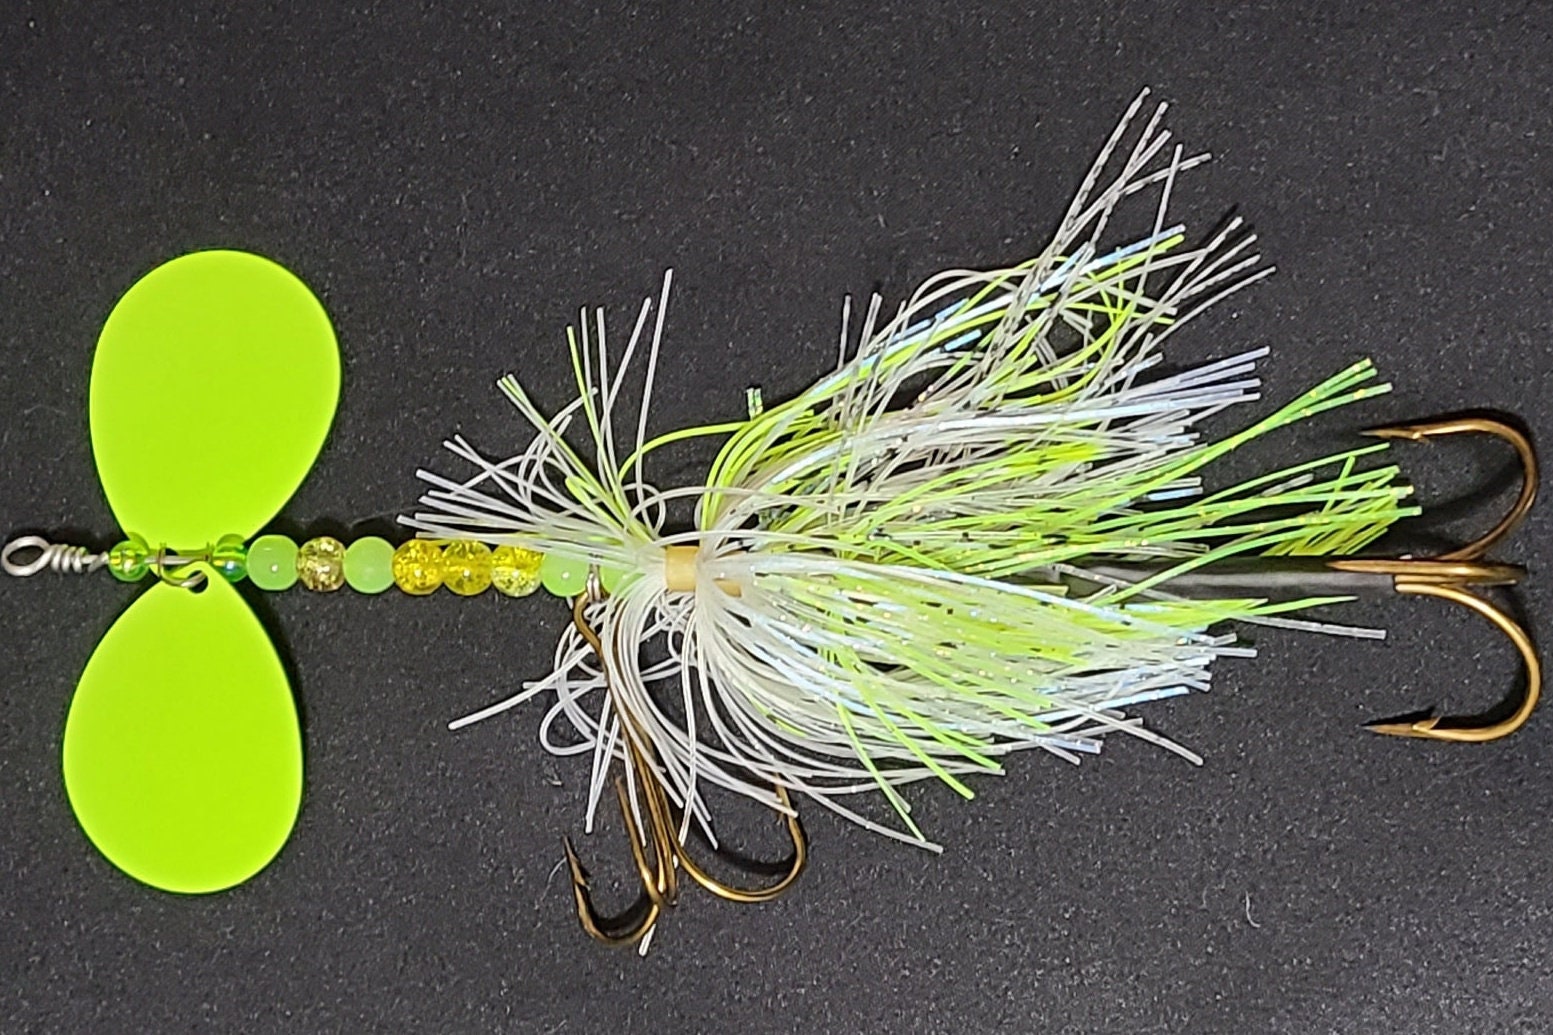 Muskie Bucktail Fishing Lure White & Yellow Chartreuse Crappie